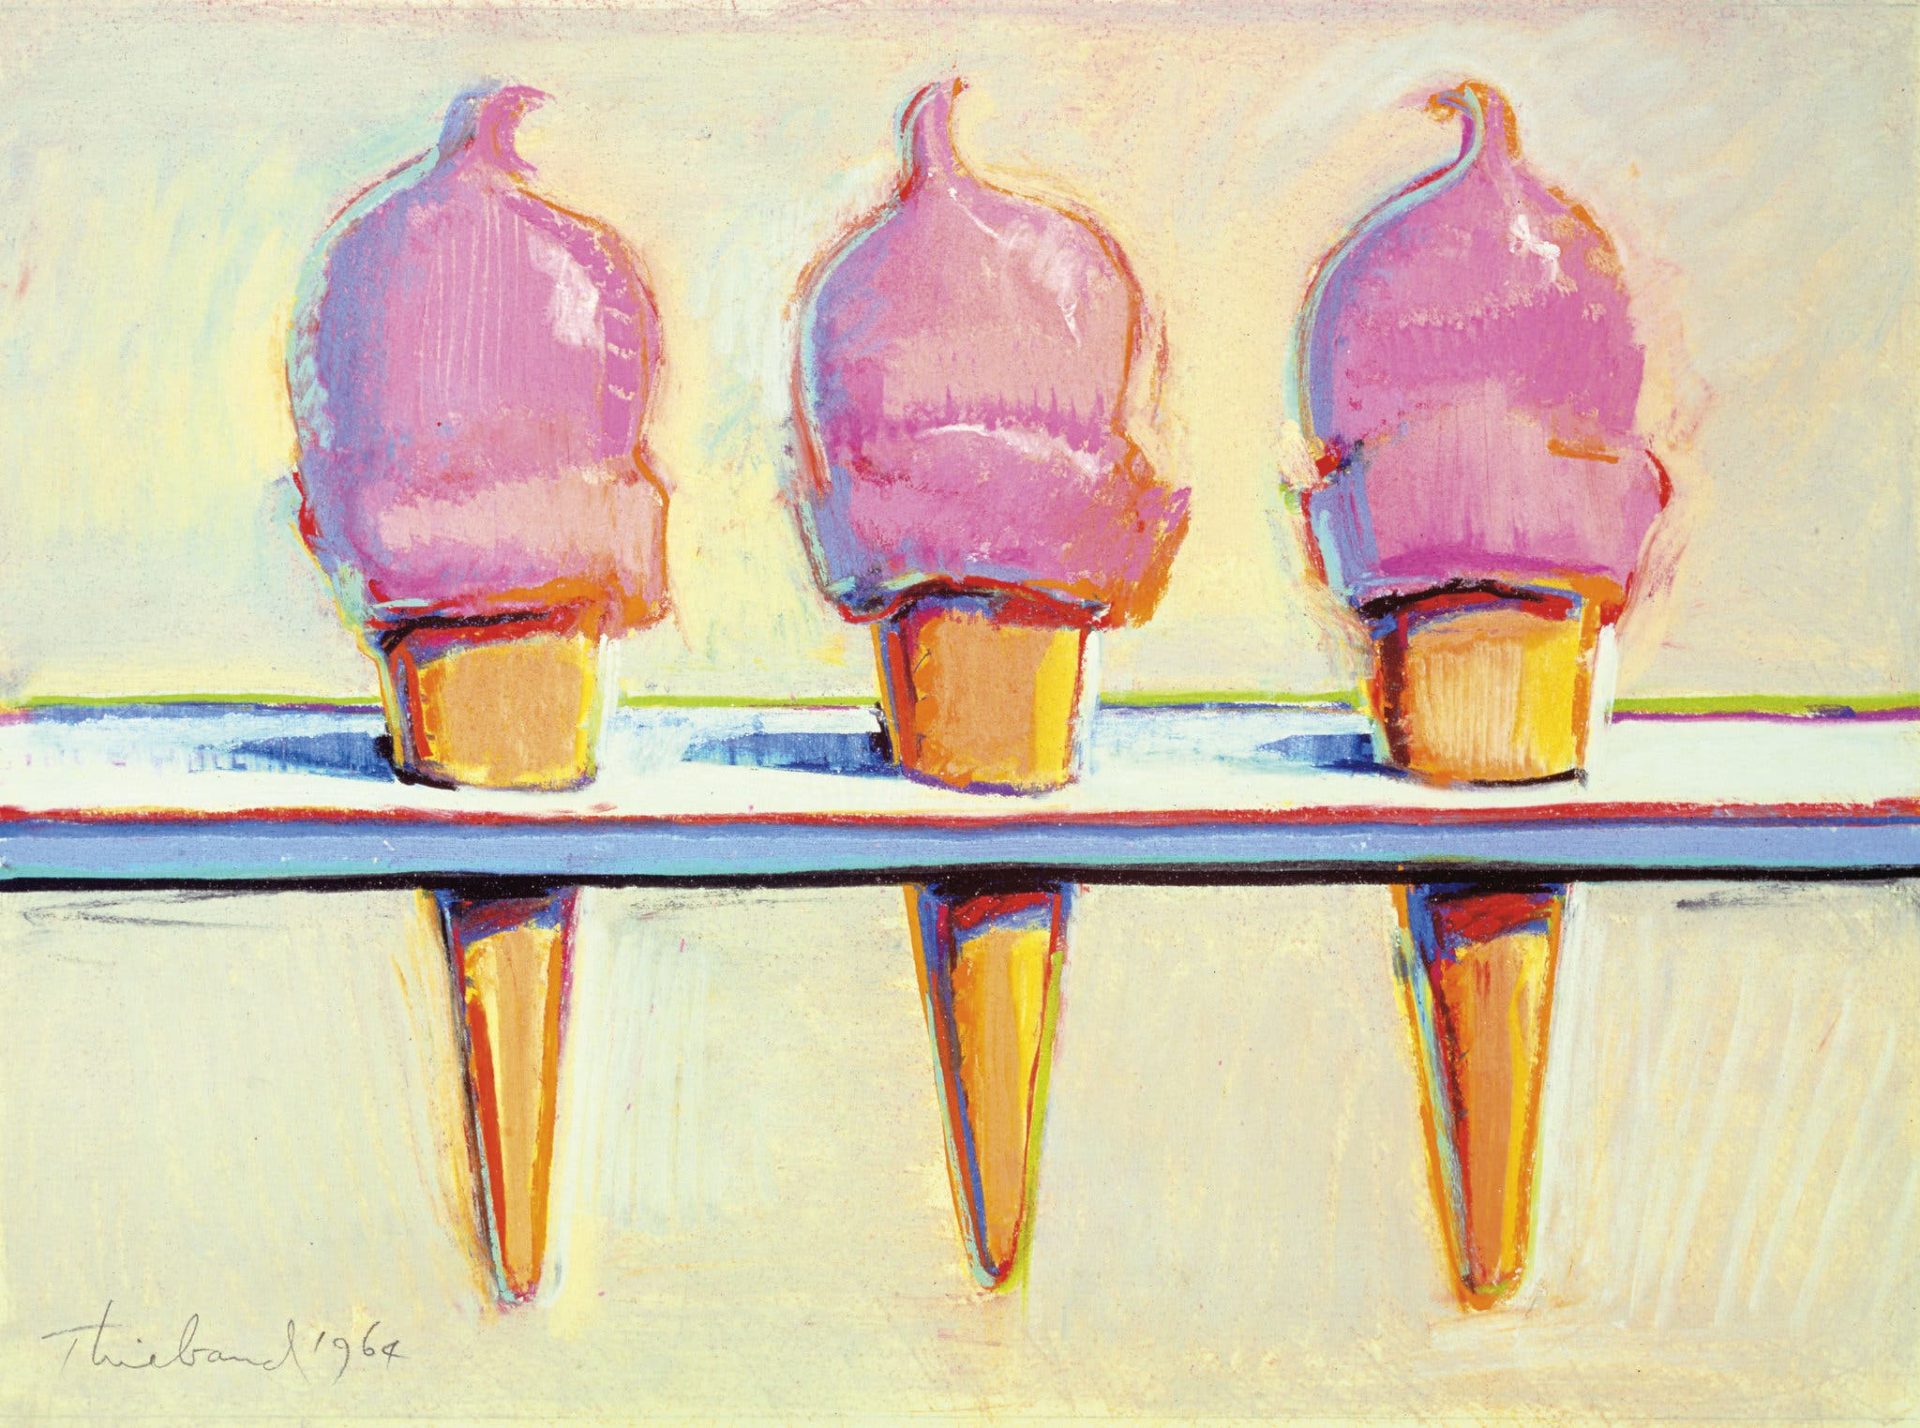 Wayne Thiebaud, “Untitled (Three Ice Creams),” 1964.